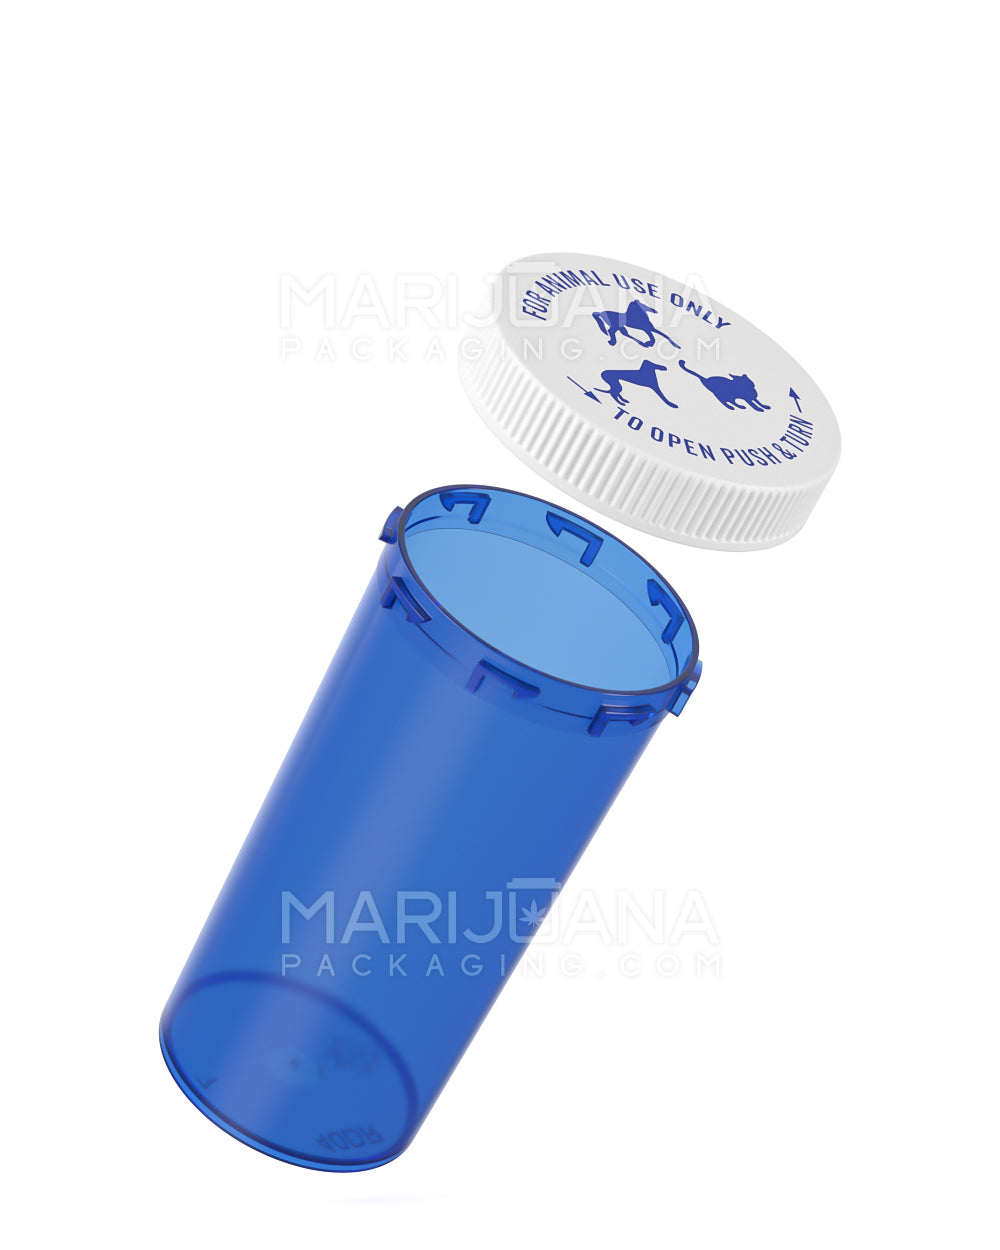 Child Resistant | Transparent Blue Veterinary Push Down & Turn Cap Vial | 40dr - 180 Count - 2